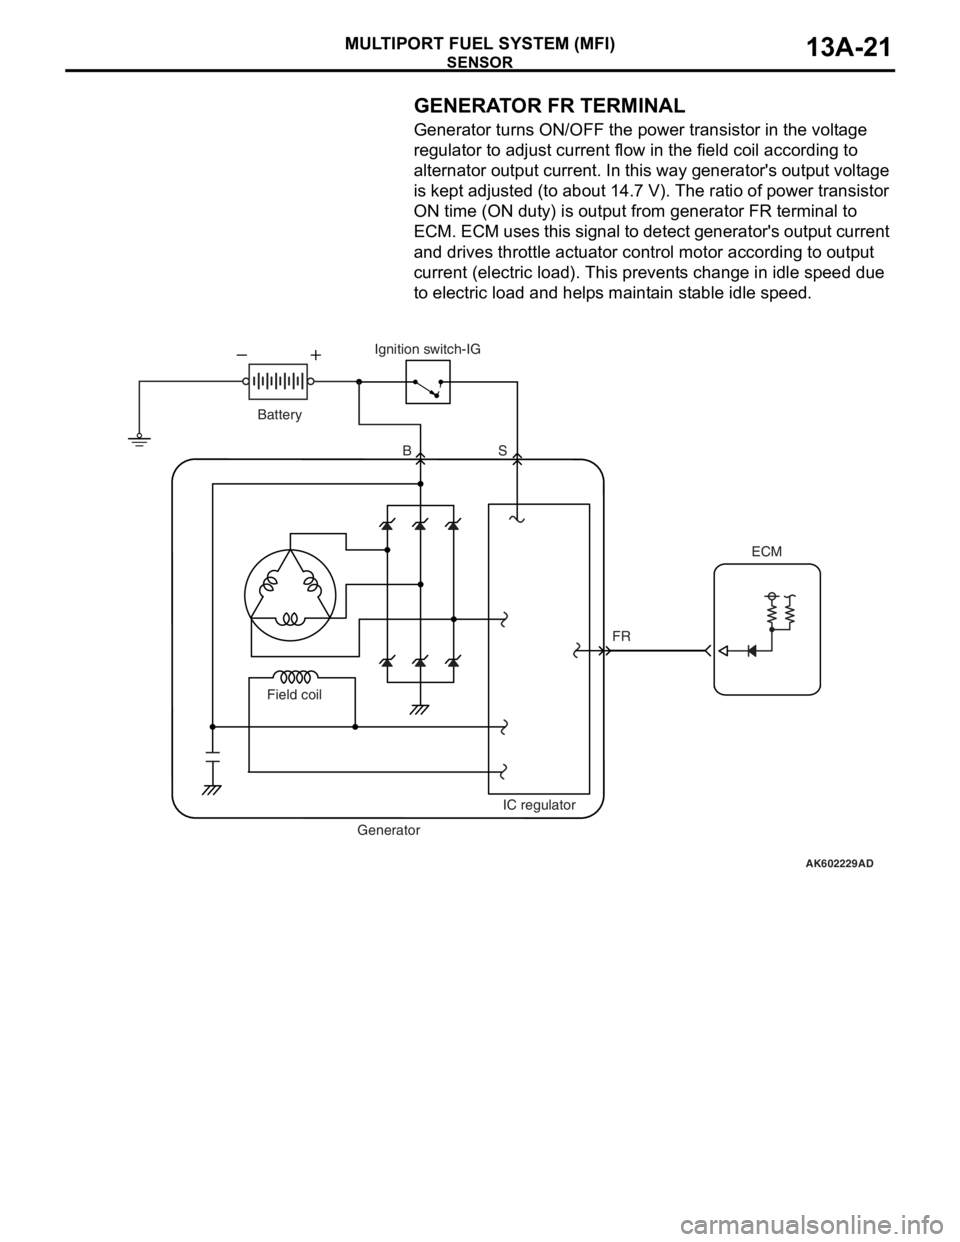 MITSUBISHI LANCER EVOLUTION X 2008  Workshop Manual SENSOR
MULTIPORT FUEL SYSTEM (MFI)13A-21
.
GENERATOR FR TERMINAL
Generator turns ON/OFF the power transistor in the voltage 
regulator to adjust current flow in the field coil according to 
alternator